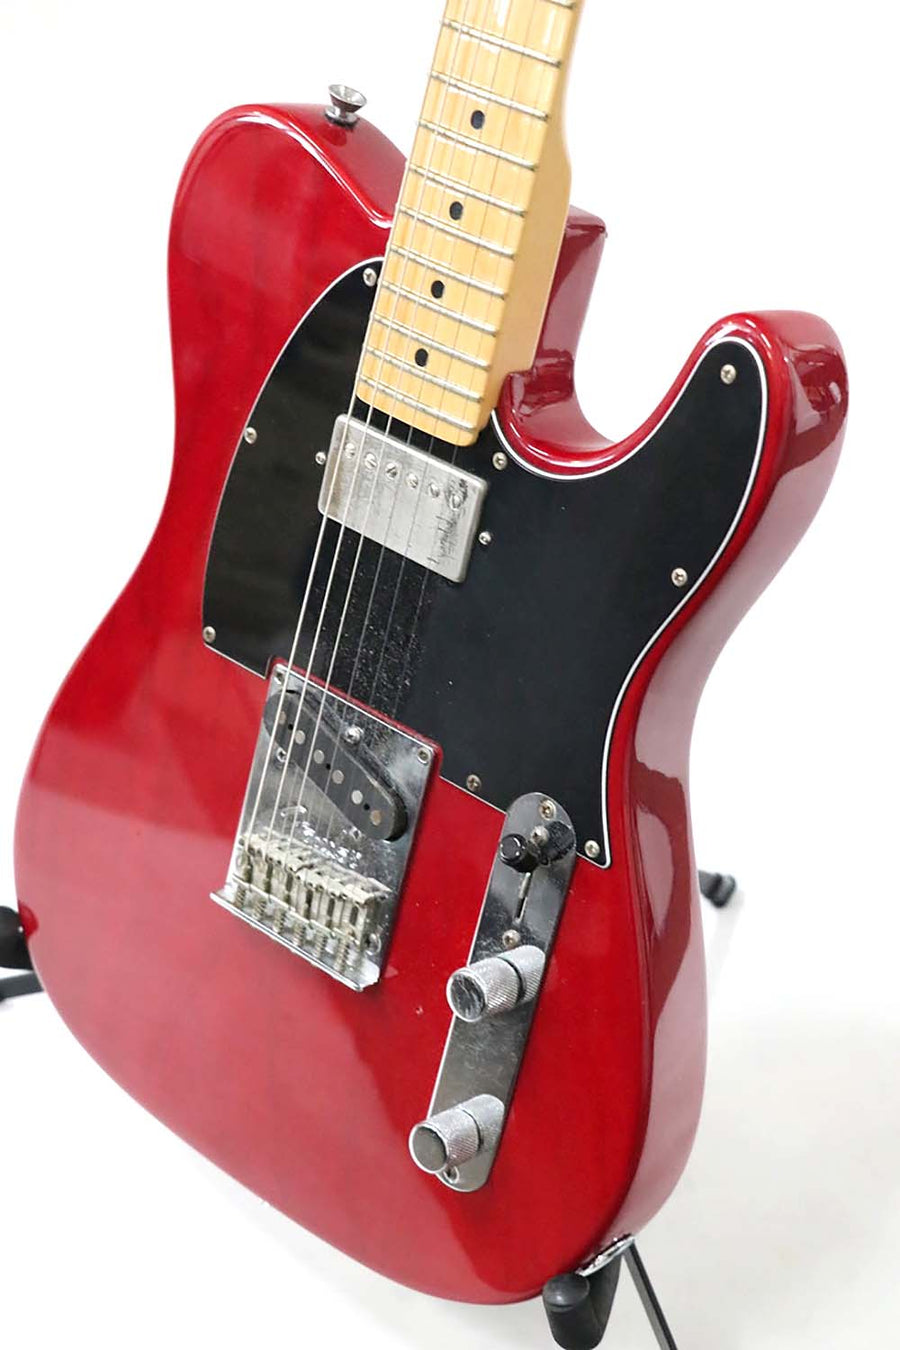 Fender American Standard Tele with Brierley PAF